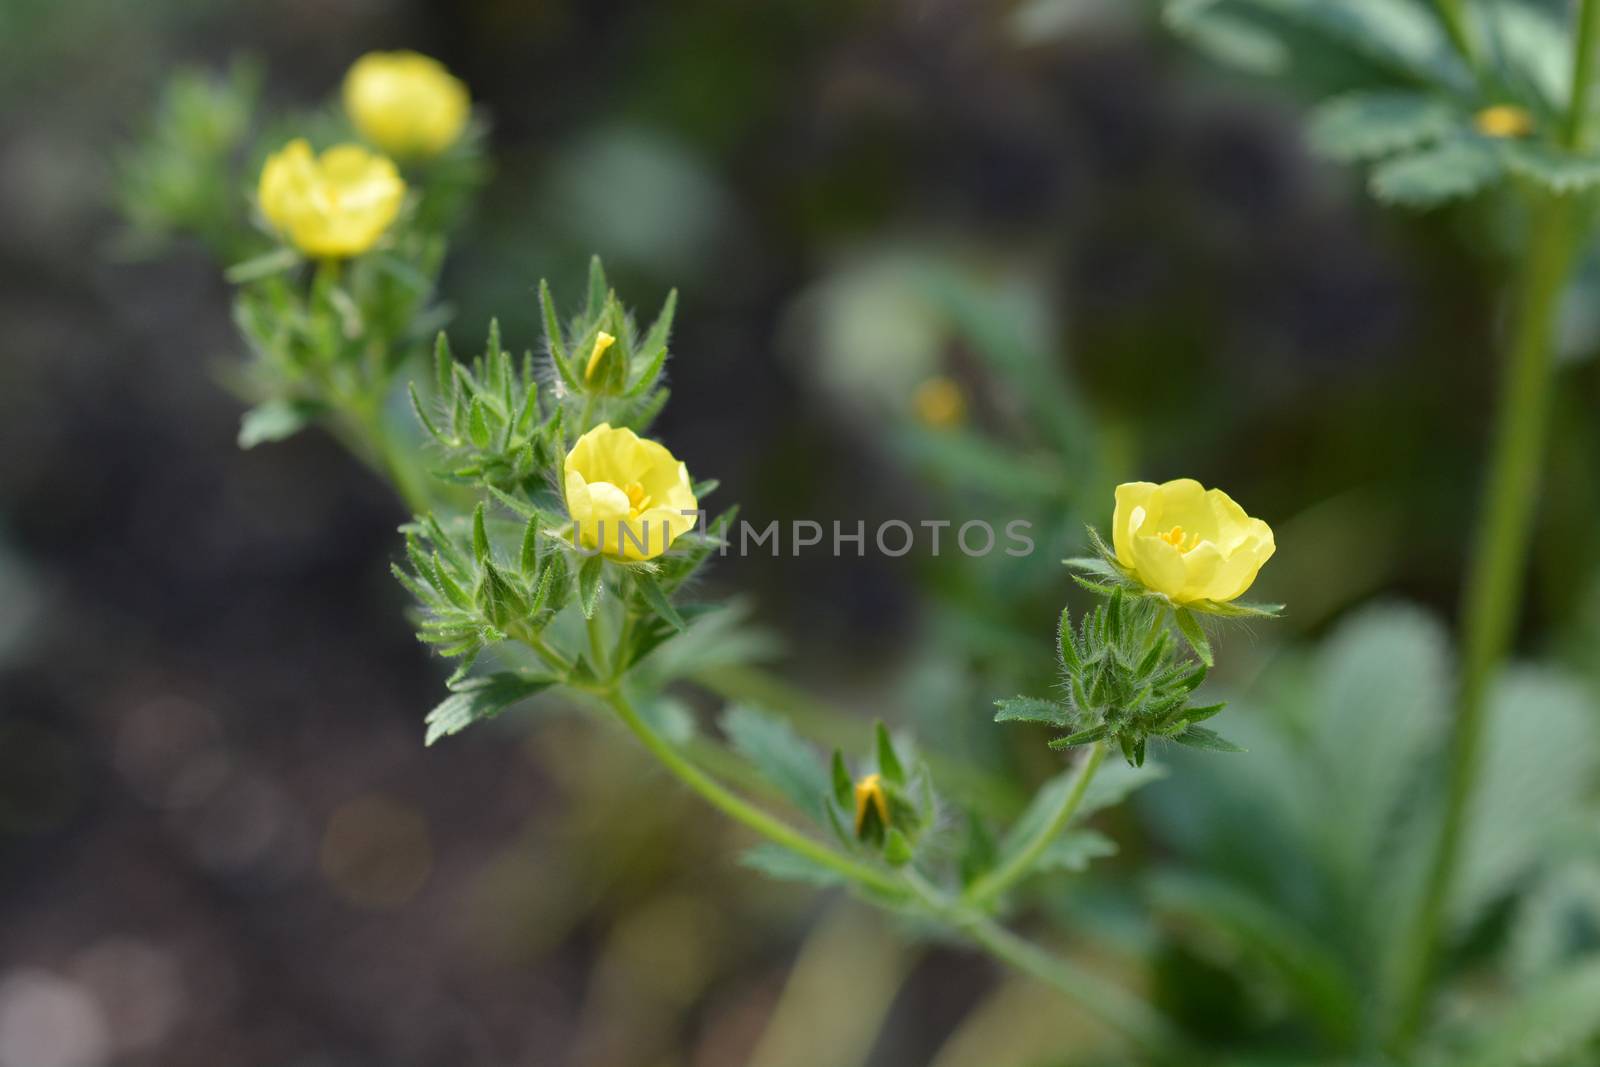 Sulphur cinquefoil yellow flower - Latin name - Potentilla recta